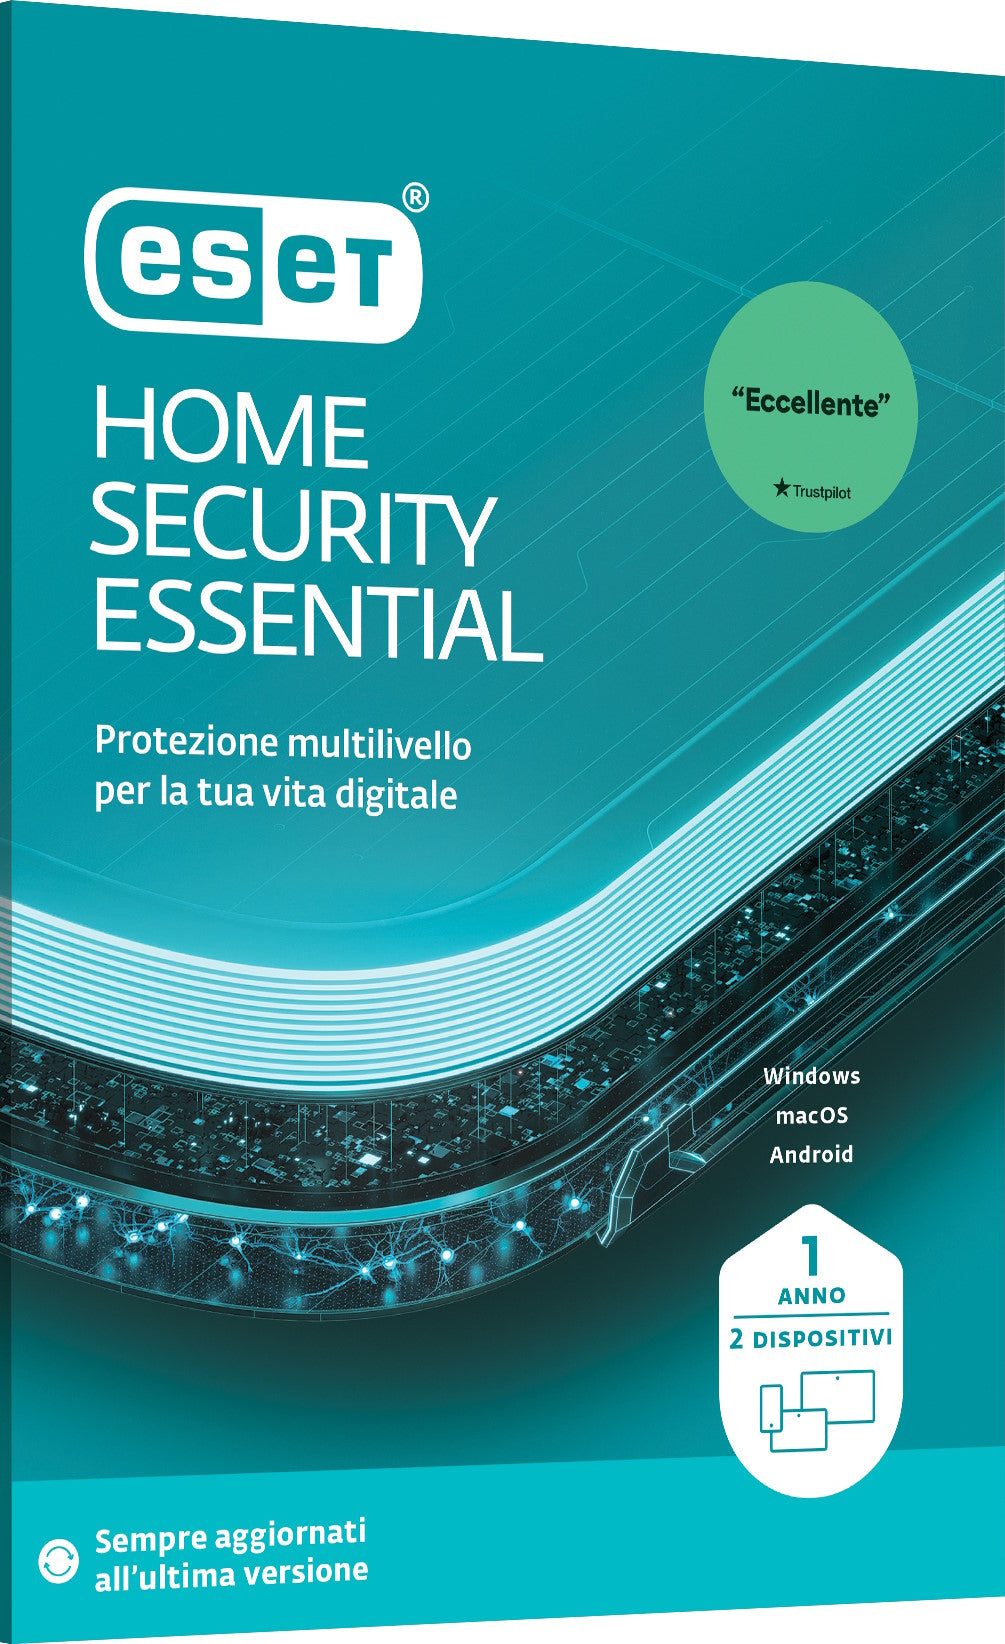 ESET HOME SECURITY ESSENTIAL EX INTERNET SECURITY [EHSE-N1-A2-BOX]